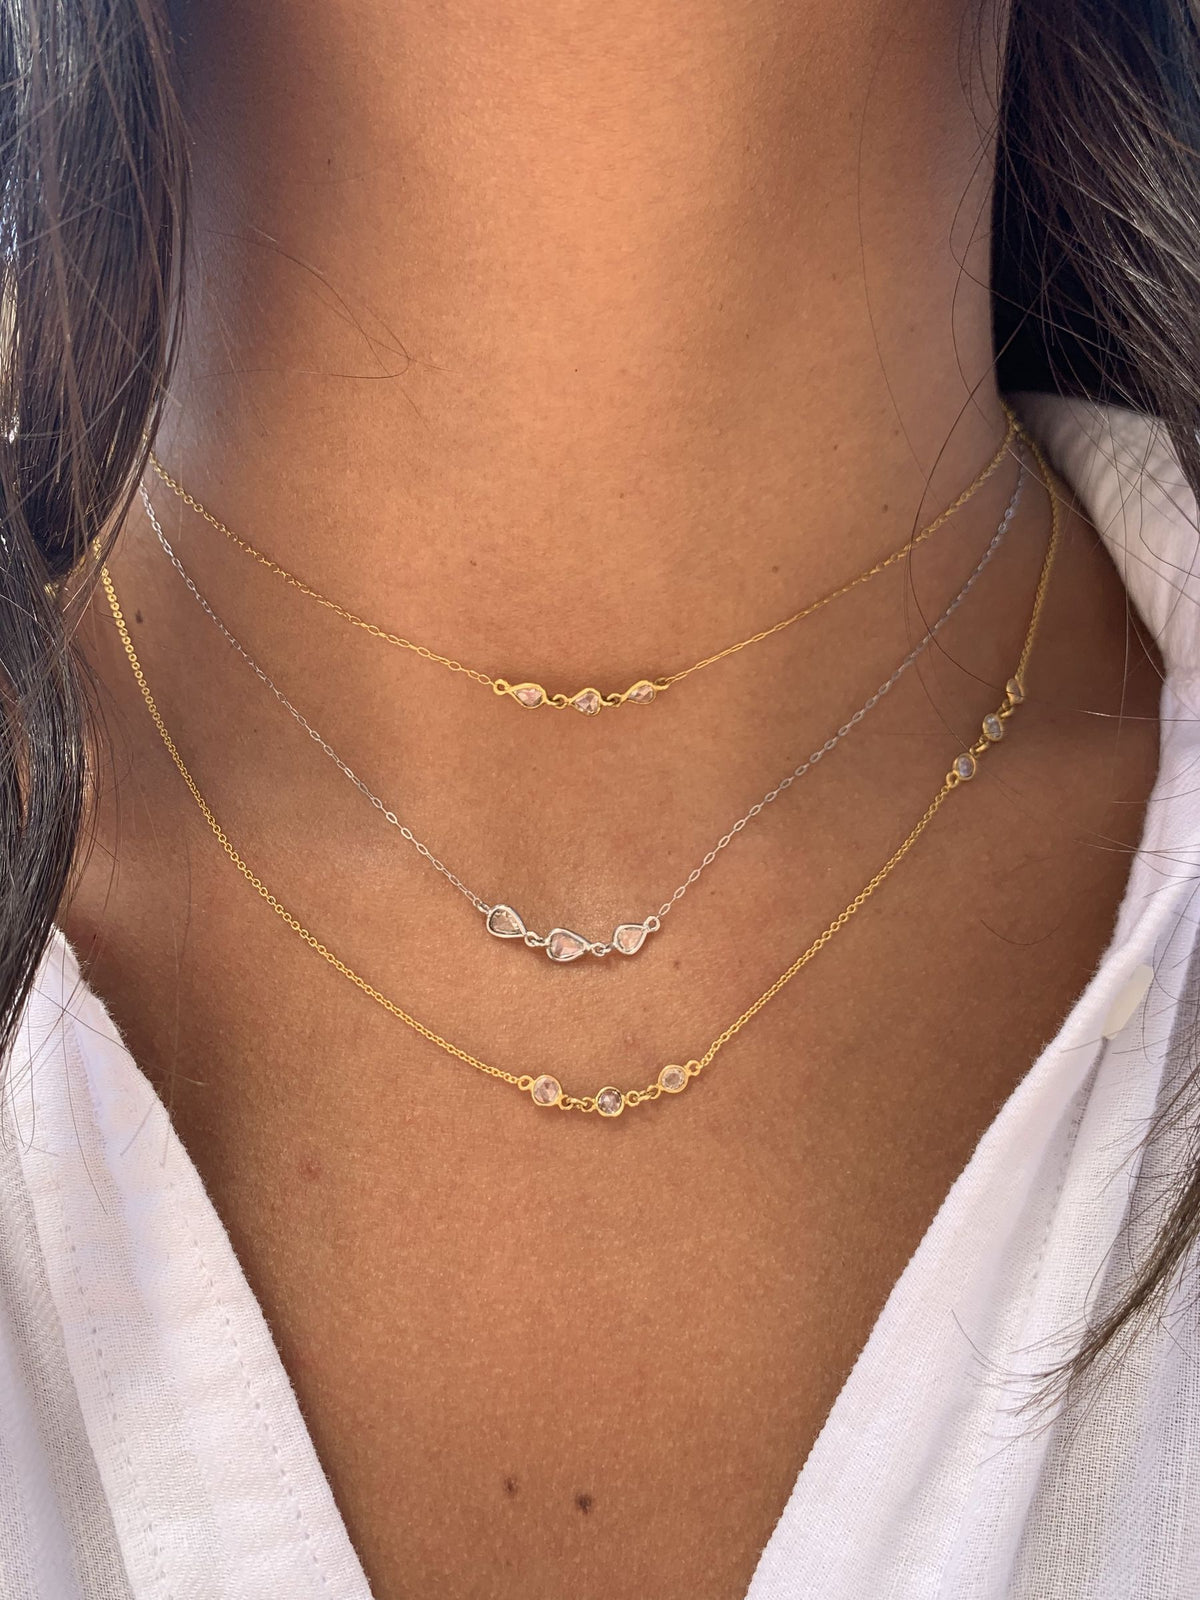 Rock & Divine Spring River Rose Cut Diamond Necklace in 18K Gold F VS2 0.54 ctw